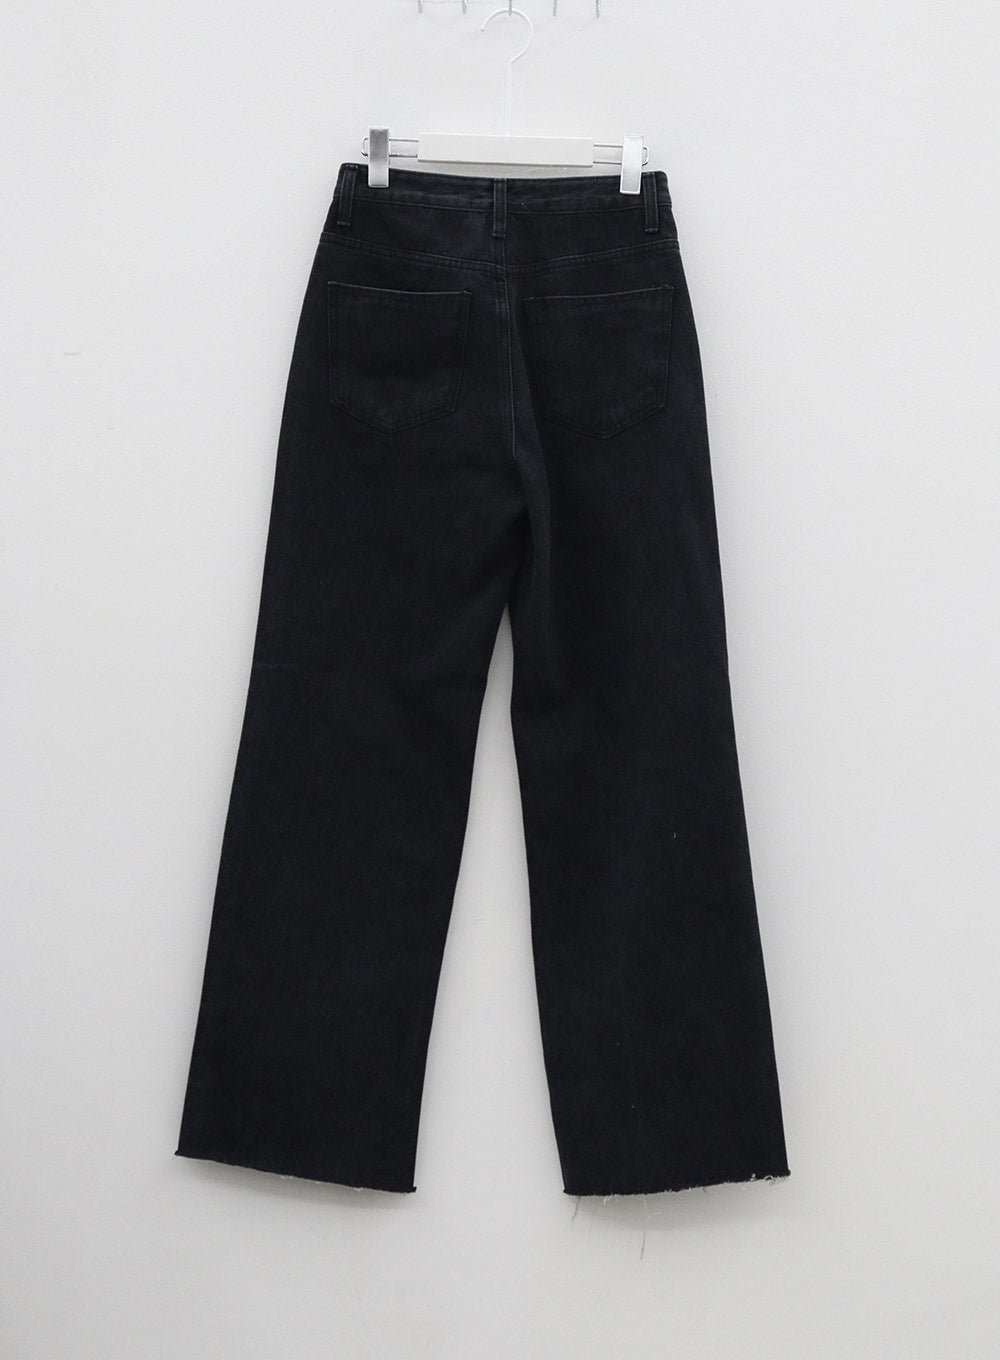 Straight Leg Black Jeans BM316